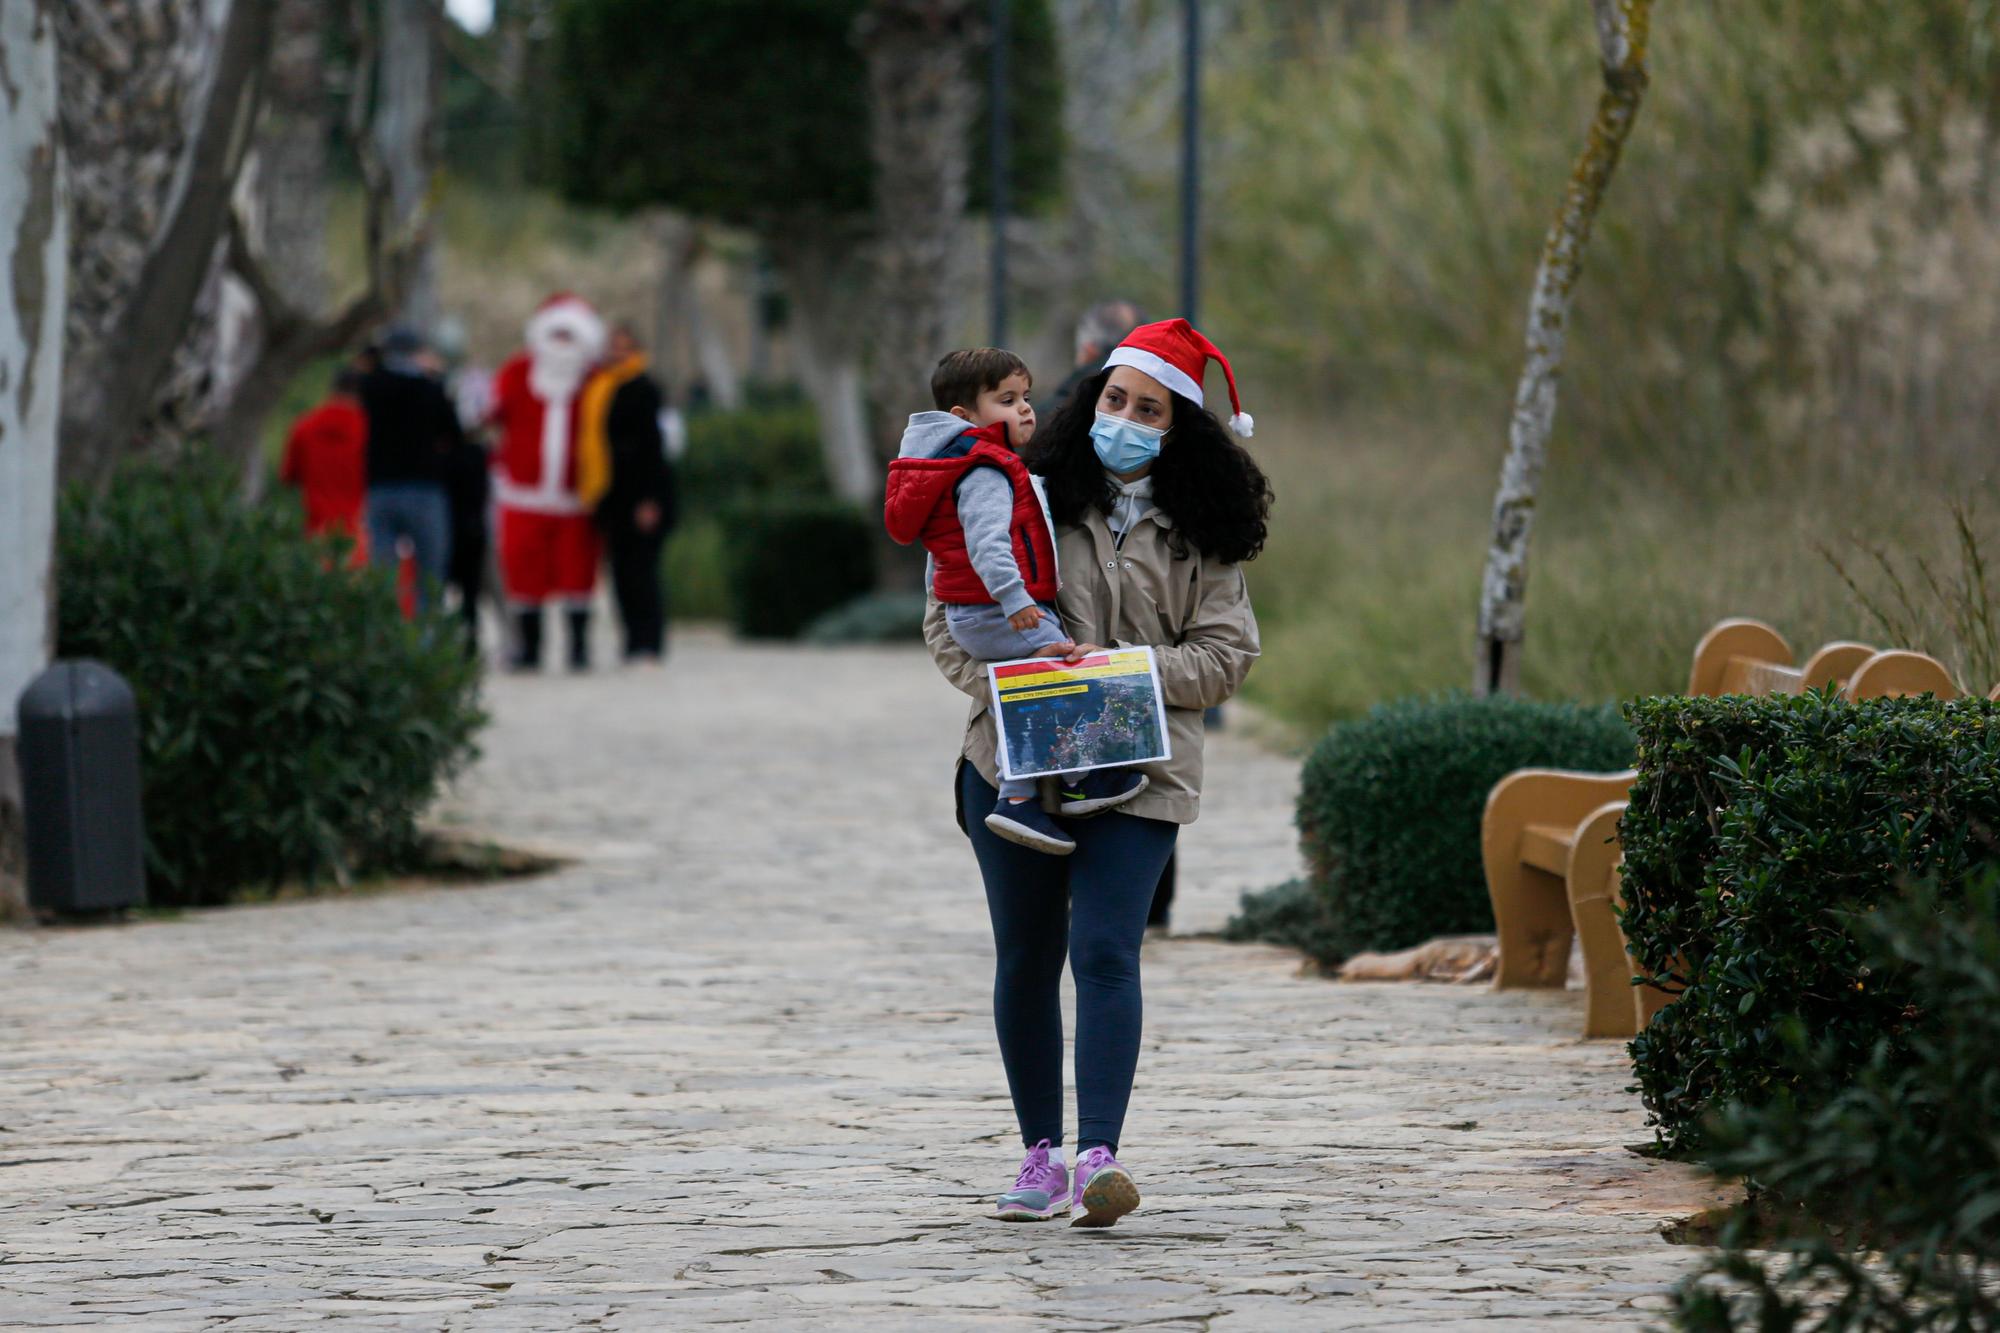 II Gincana Christmas Race en Santa Eulària